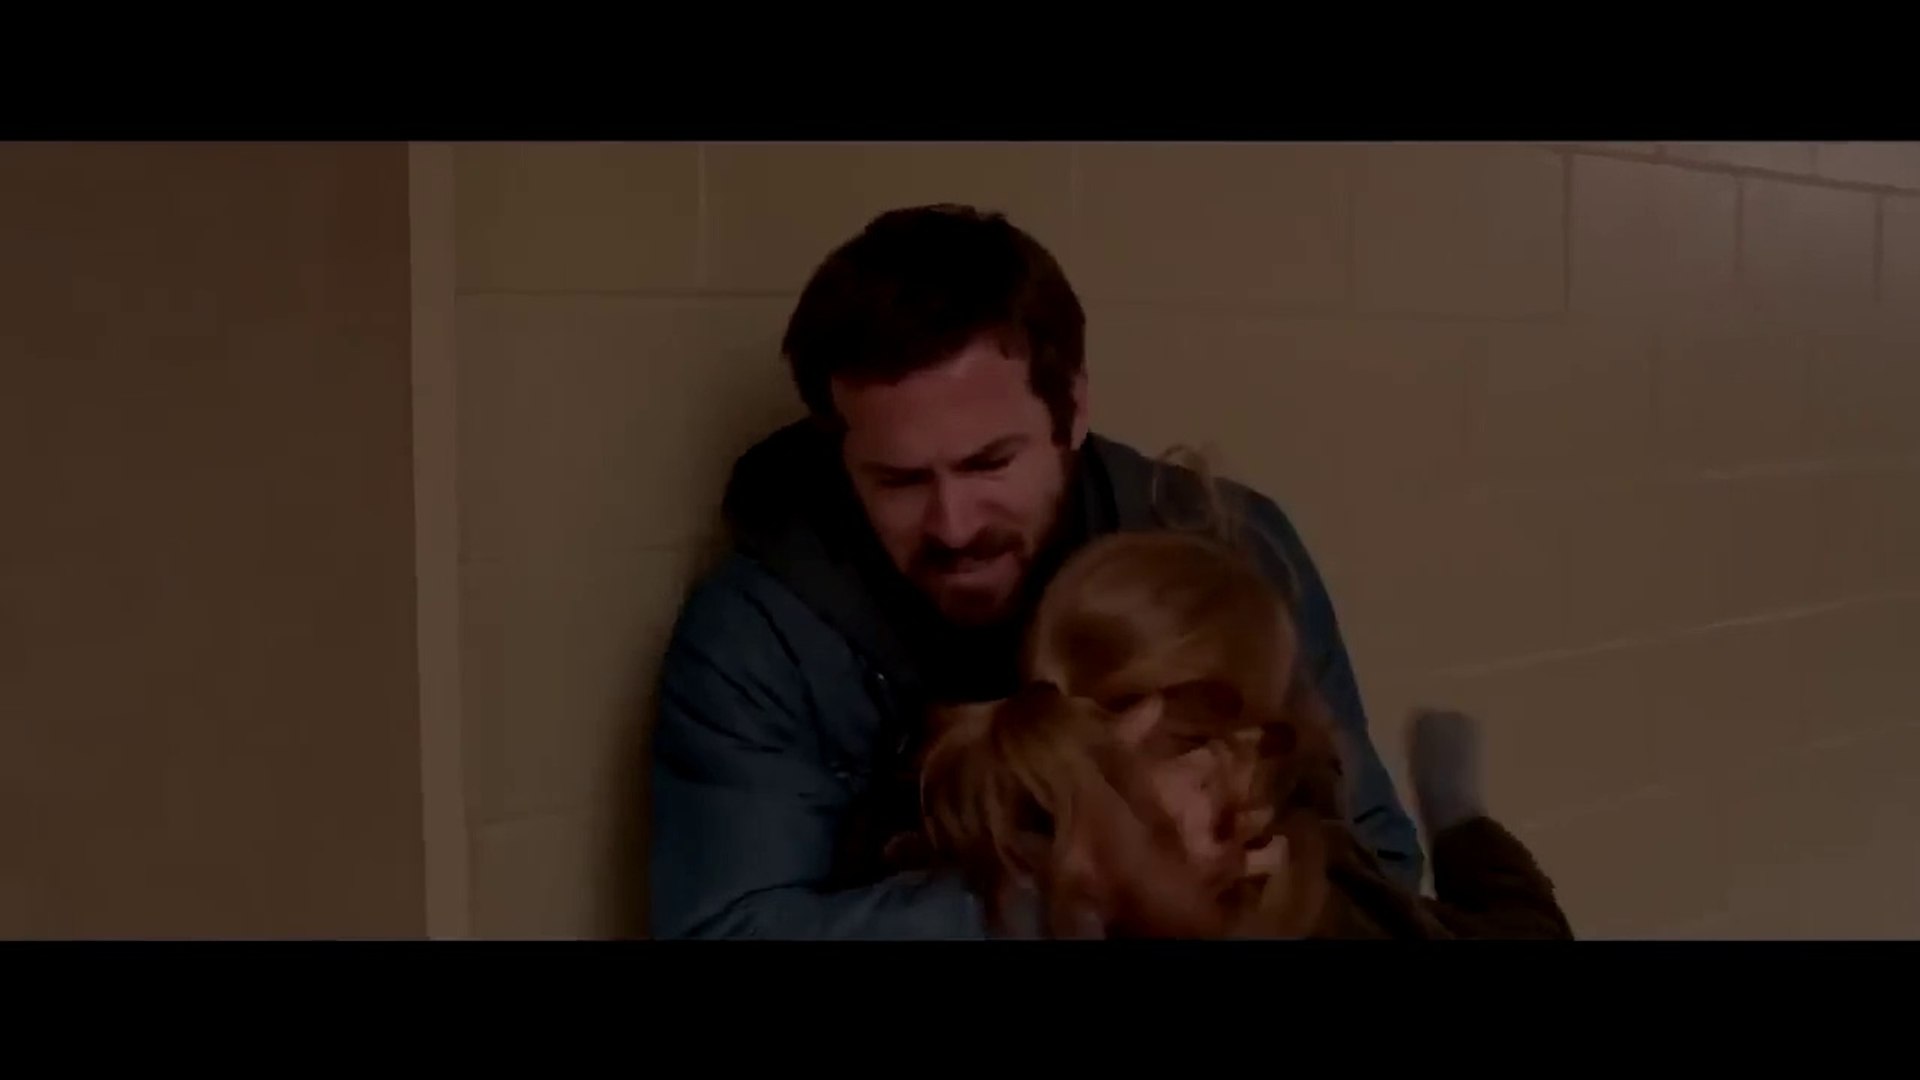 The Captive Official International Trailer #1 (2014) - Ryan